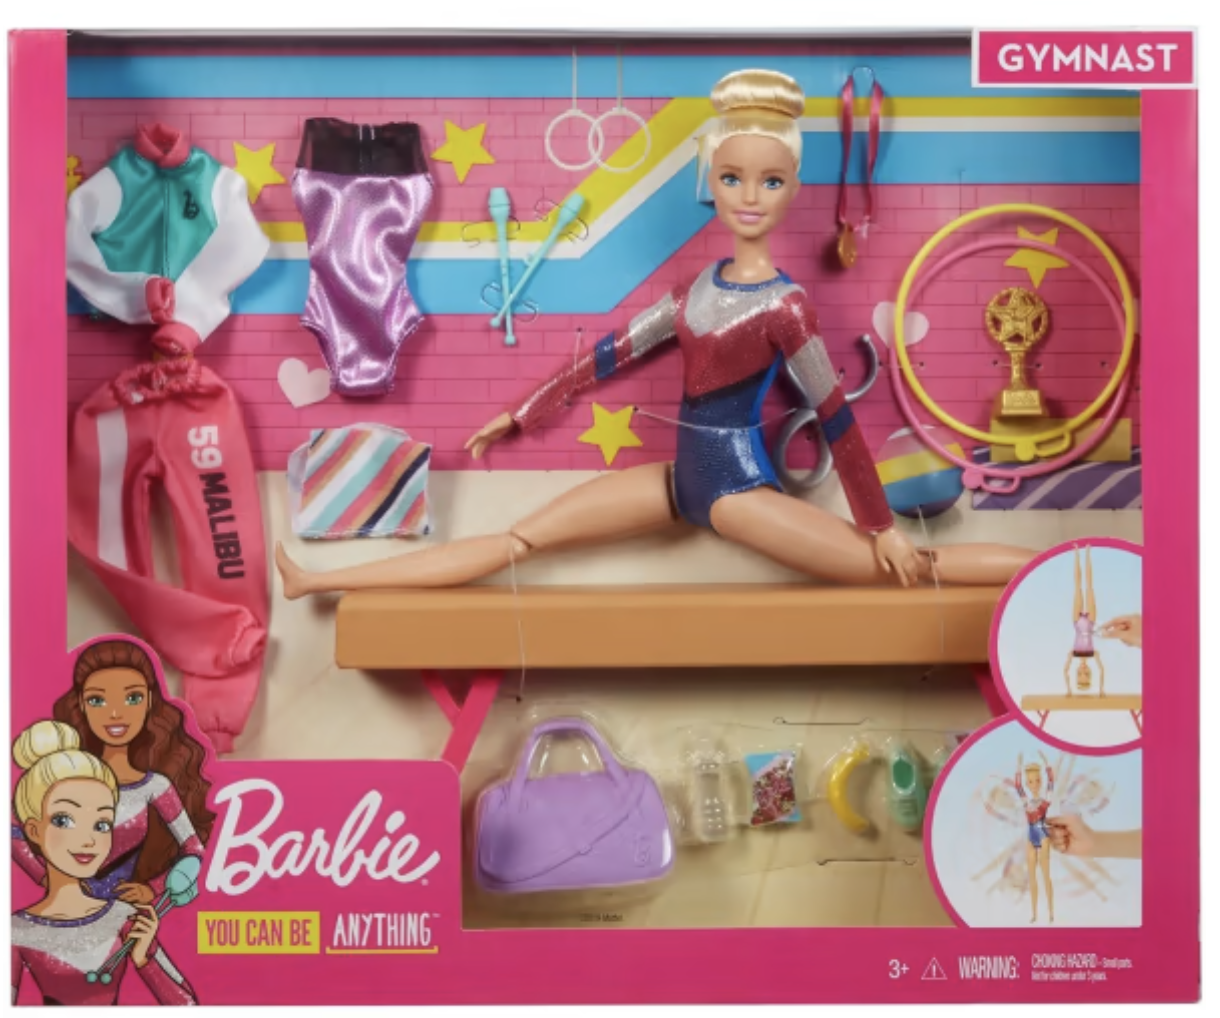 Arlia - Barbie Gymnast